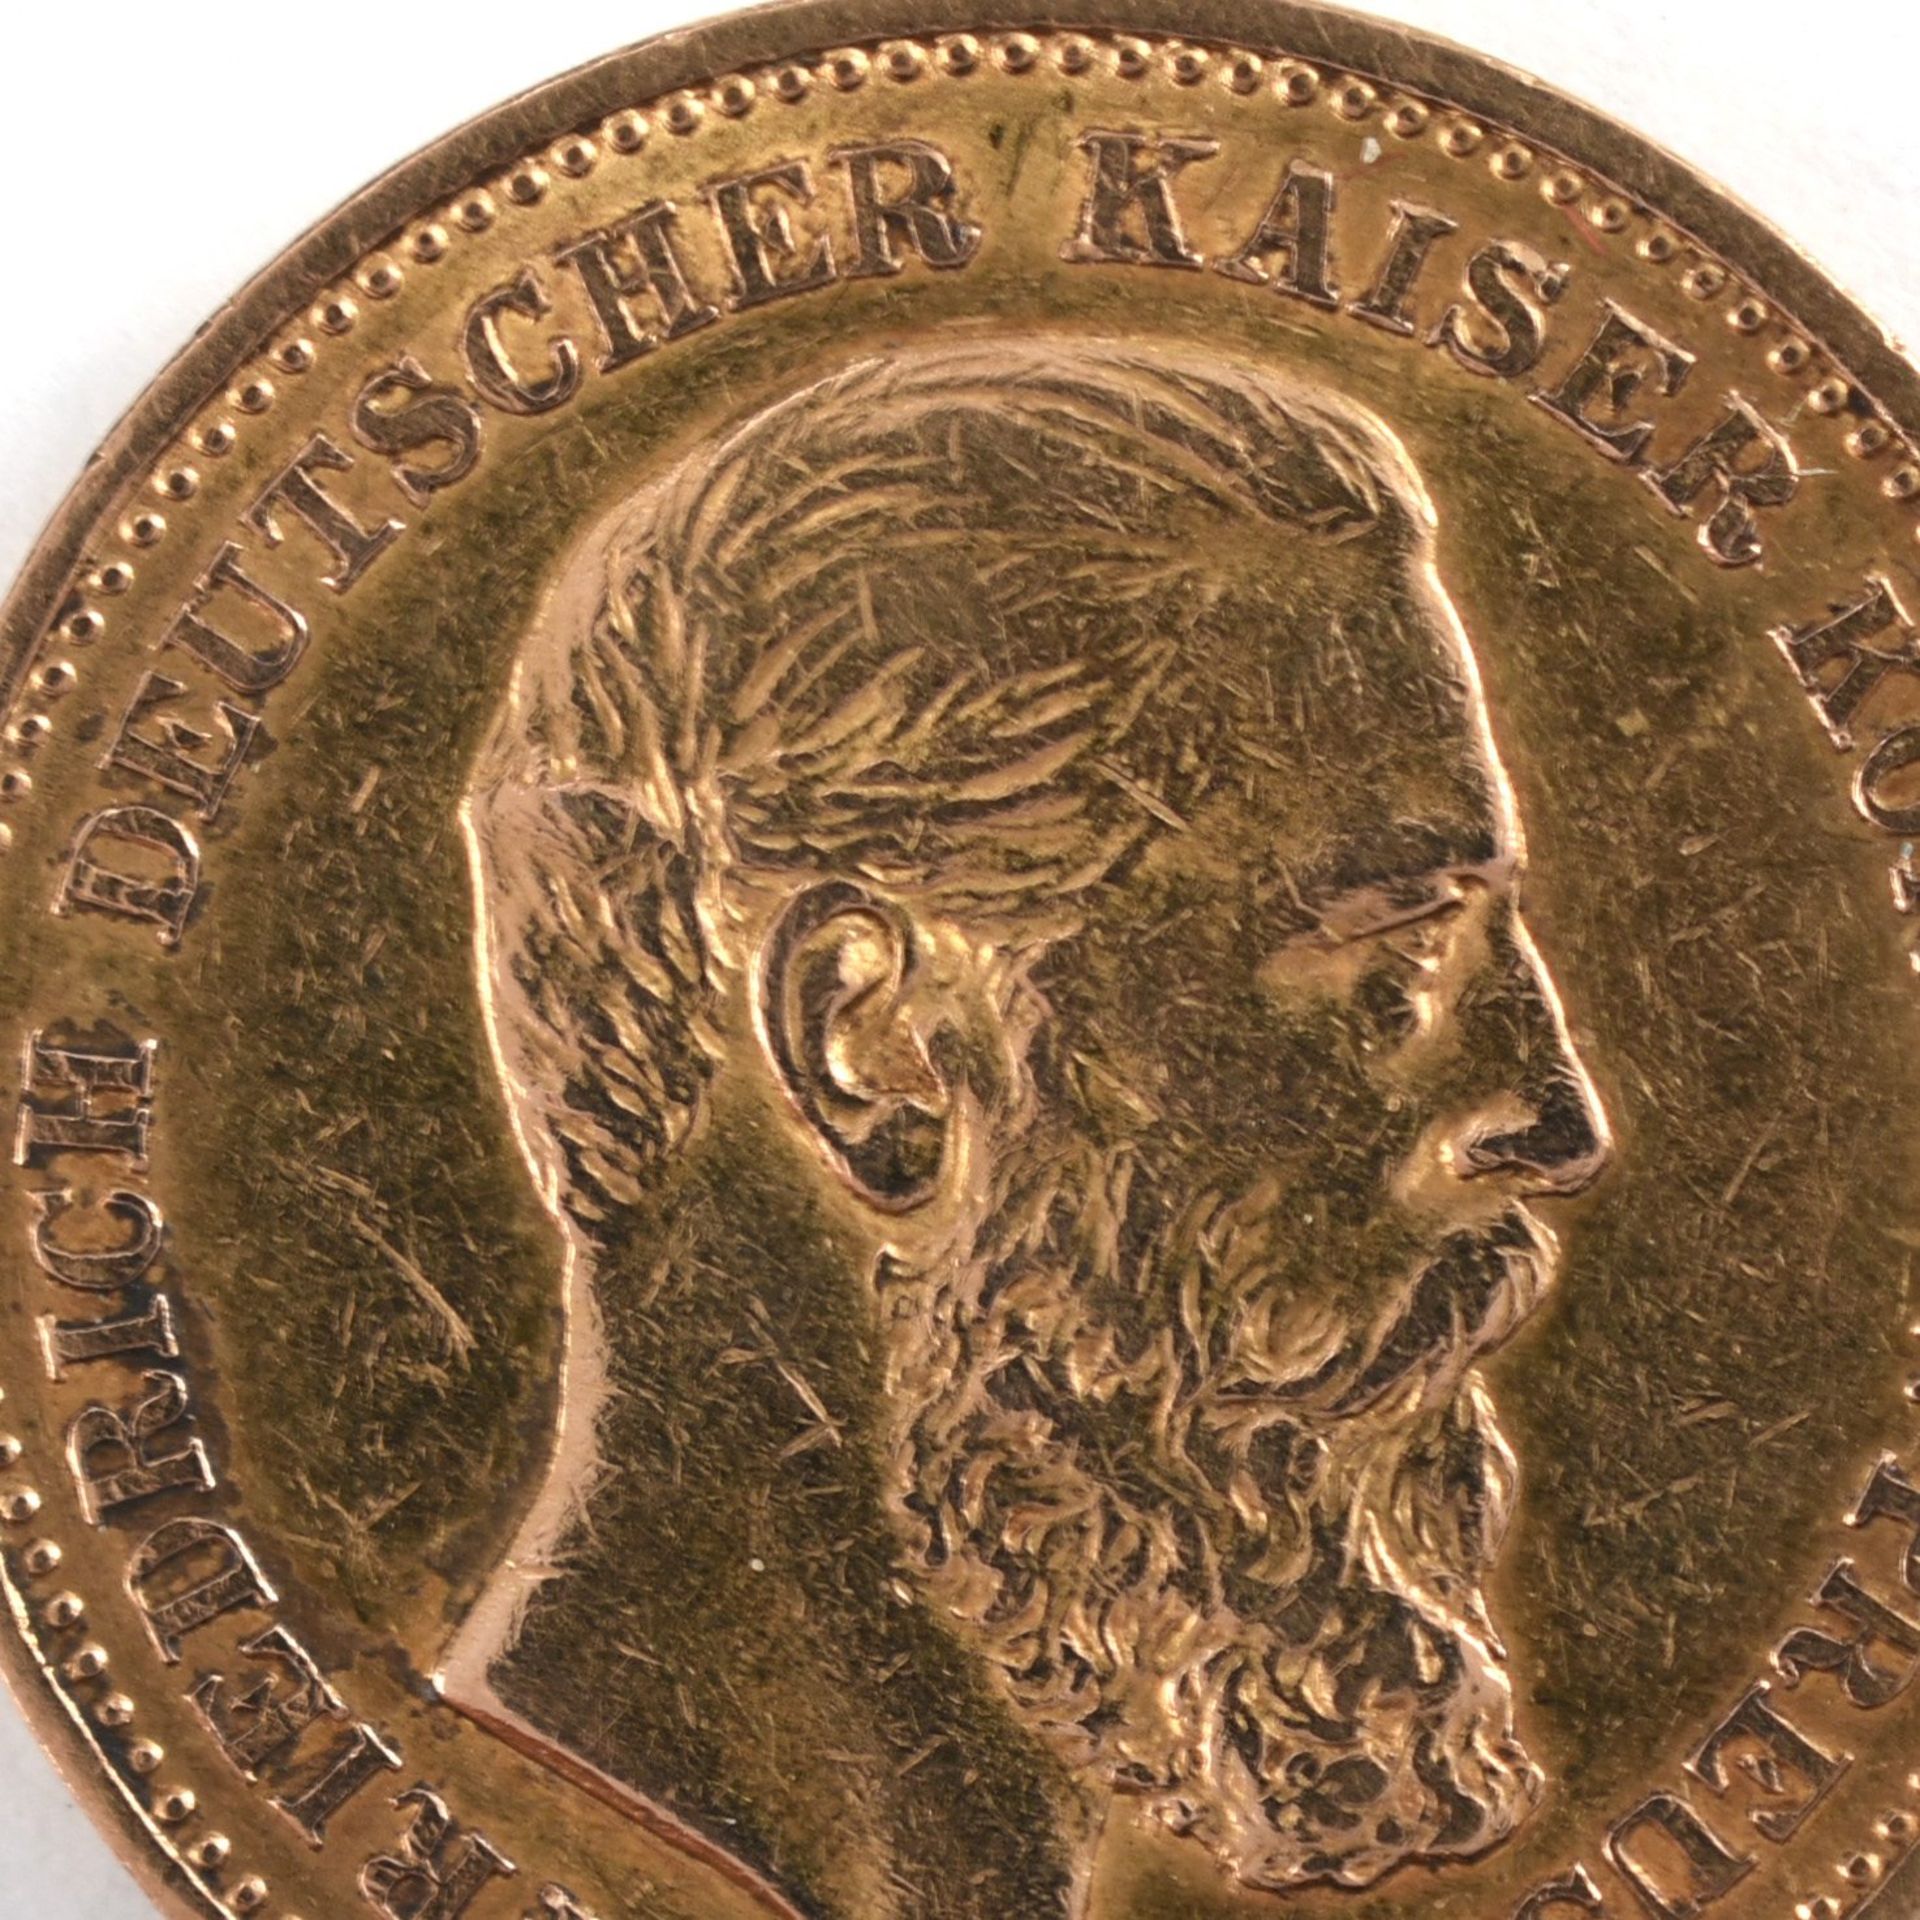 Goldmünze Preußen 1888 20 Mark in Gold, 900/1000, 7,96 g, D ca. 22,5 mm, av. Friedrich Deutscher